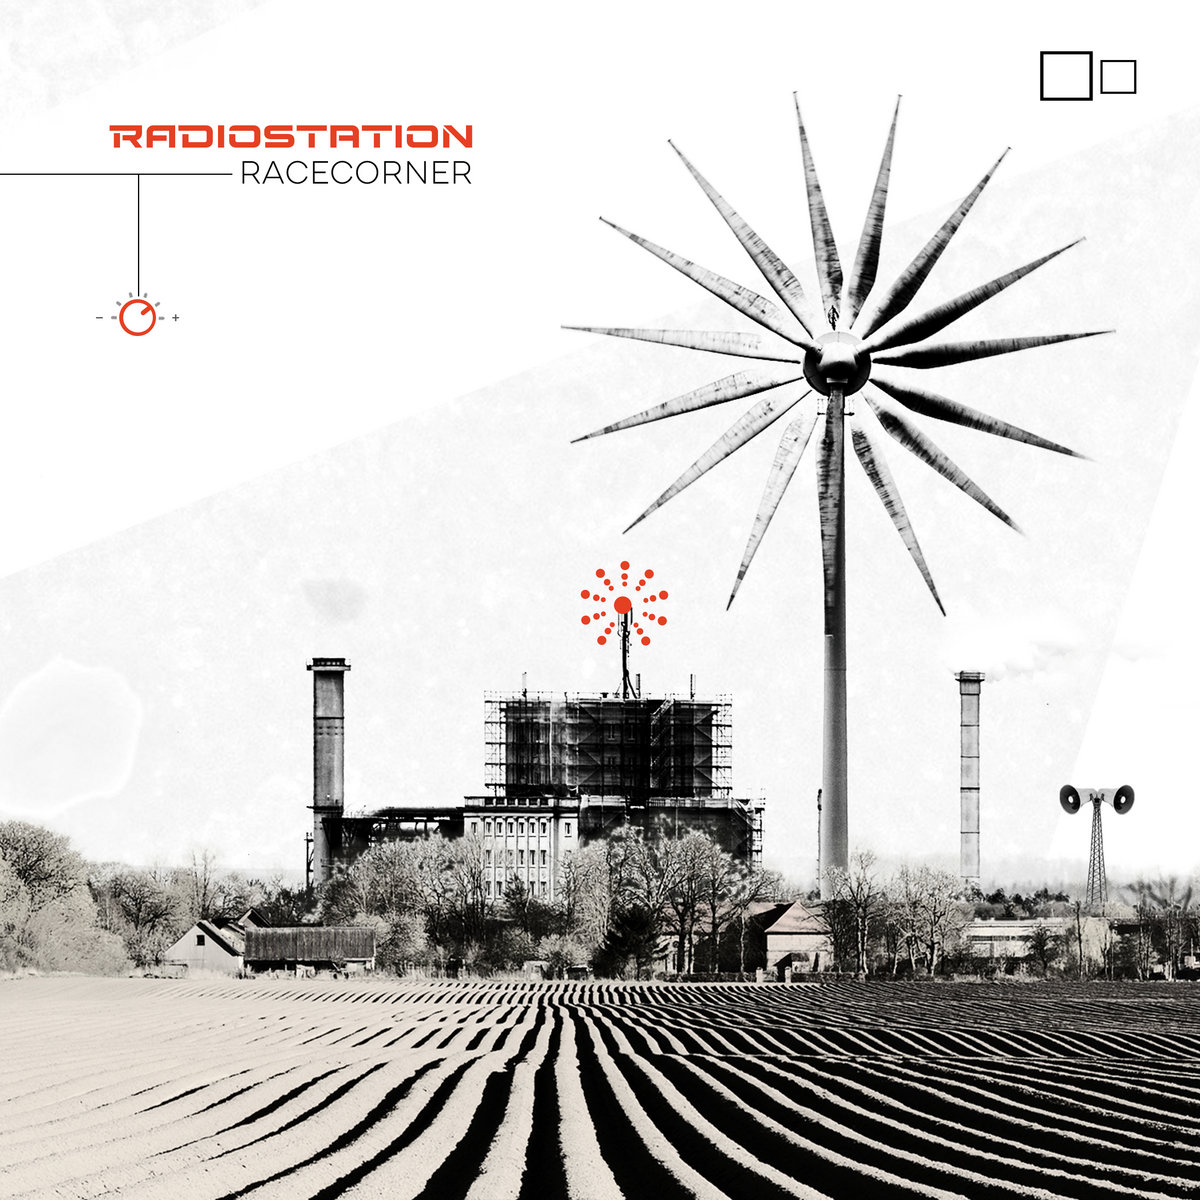 Radiostation/racecorner cover